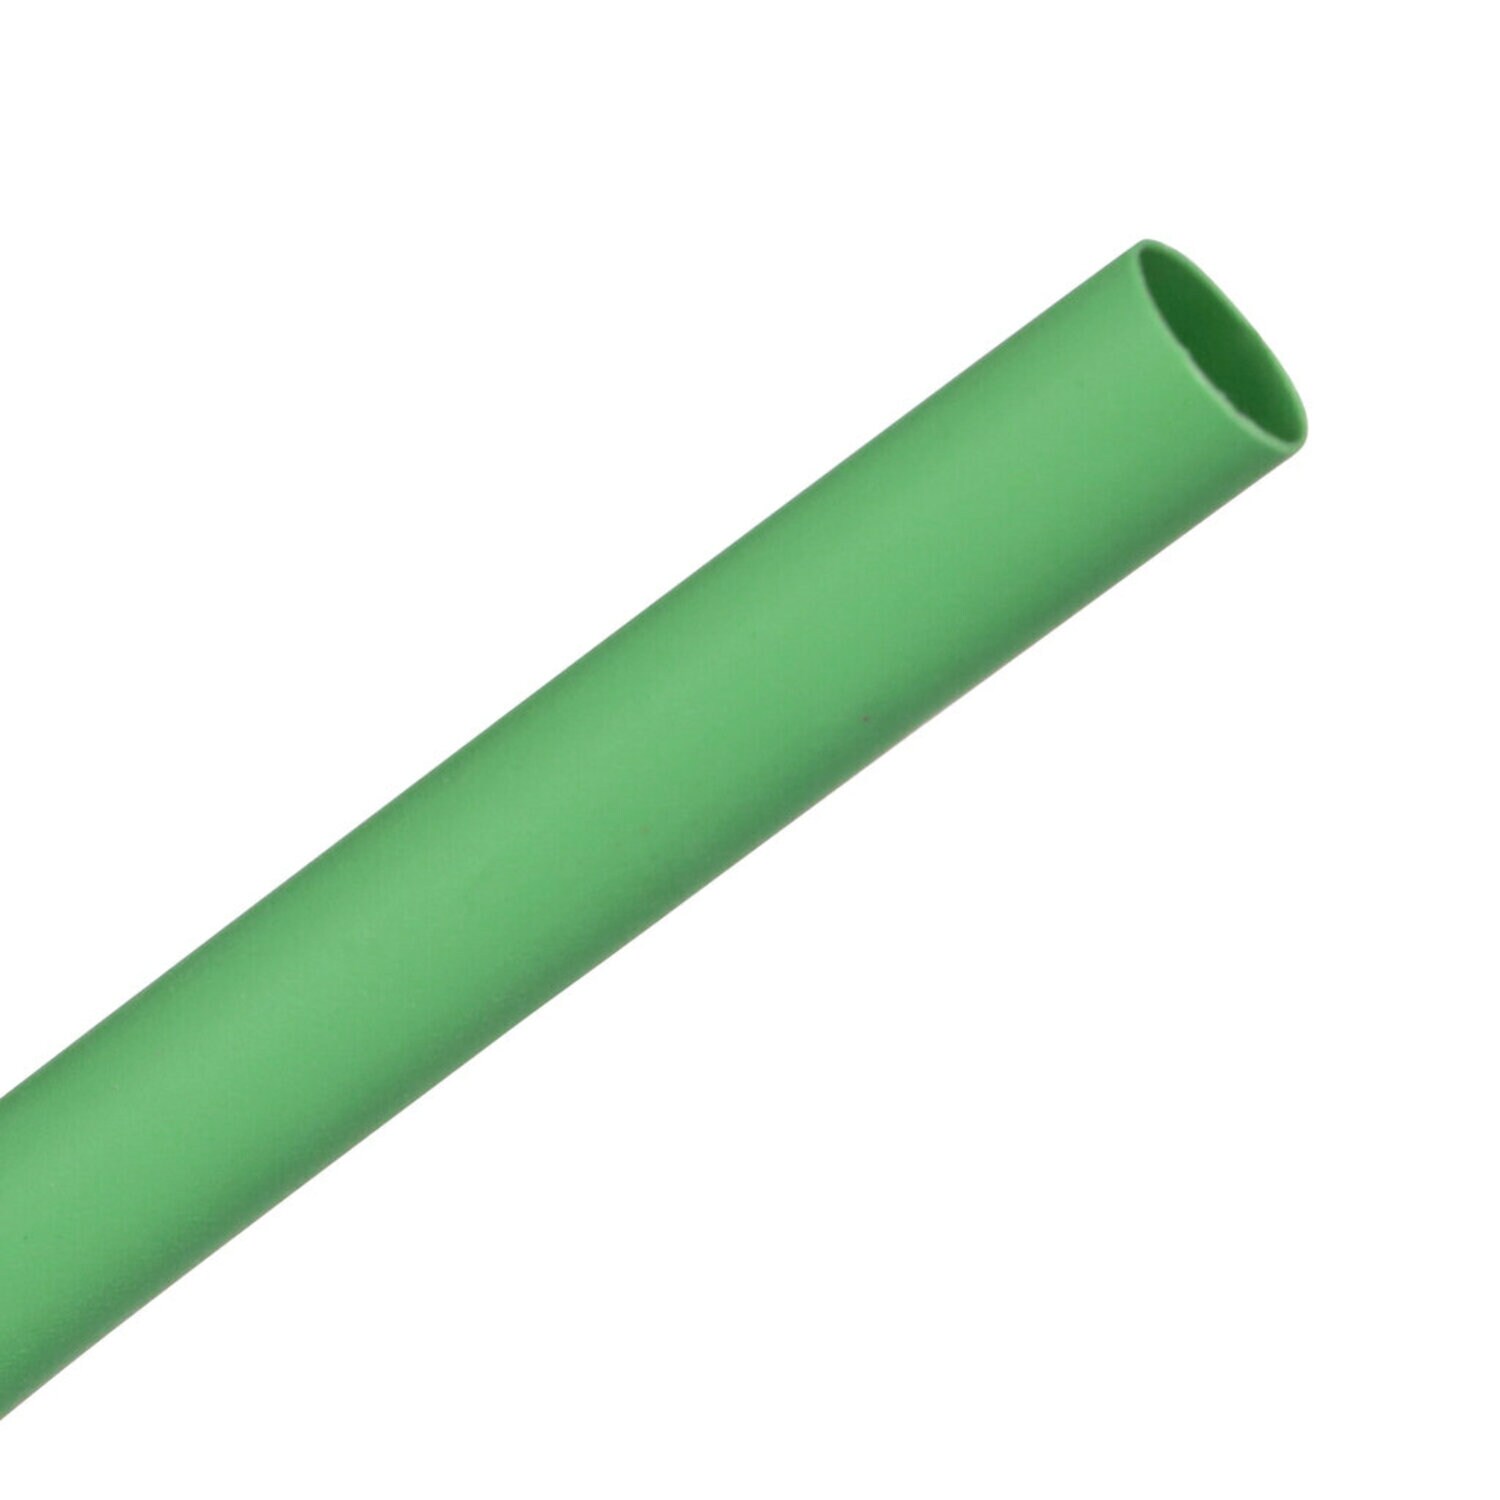 7100020162 - 3M Heat Shrink Thin-Wall Tubing FP-301-1/8-Green-500`: 500 ft spool
length, 1500 ft/case